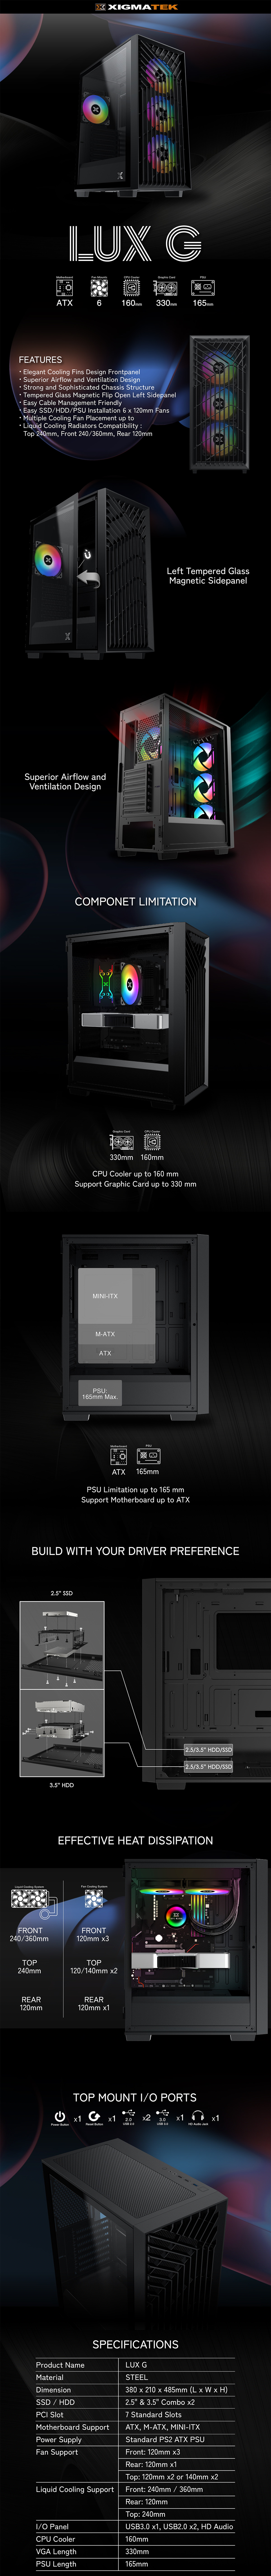 XIGMATEK LUX G Black PC Case 4pcs Pre-installed ARGB Fan Galaxy II Fan  Control Kit Tempered Glass Side Panel ATX Mid Tower Computer Case 